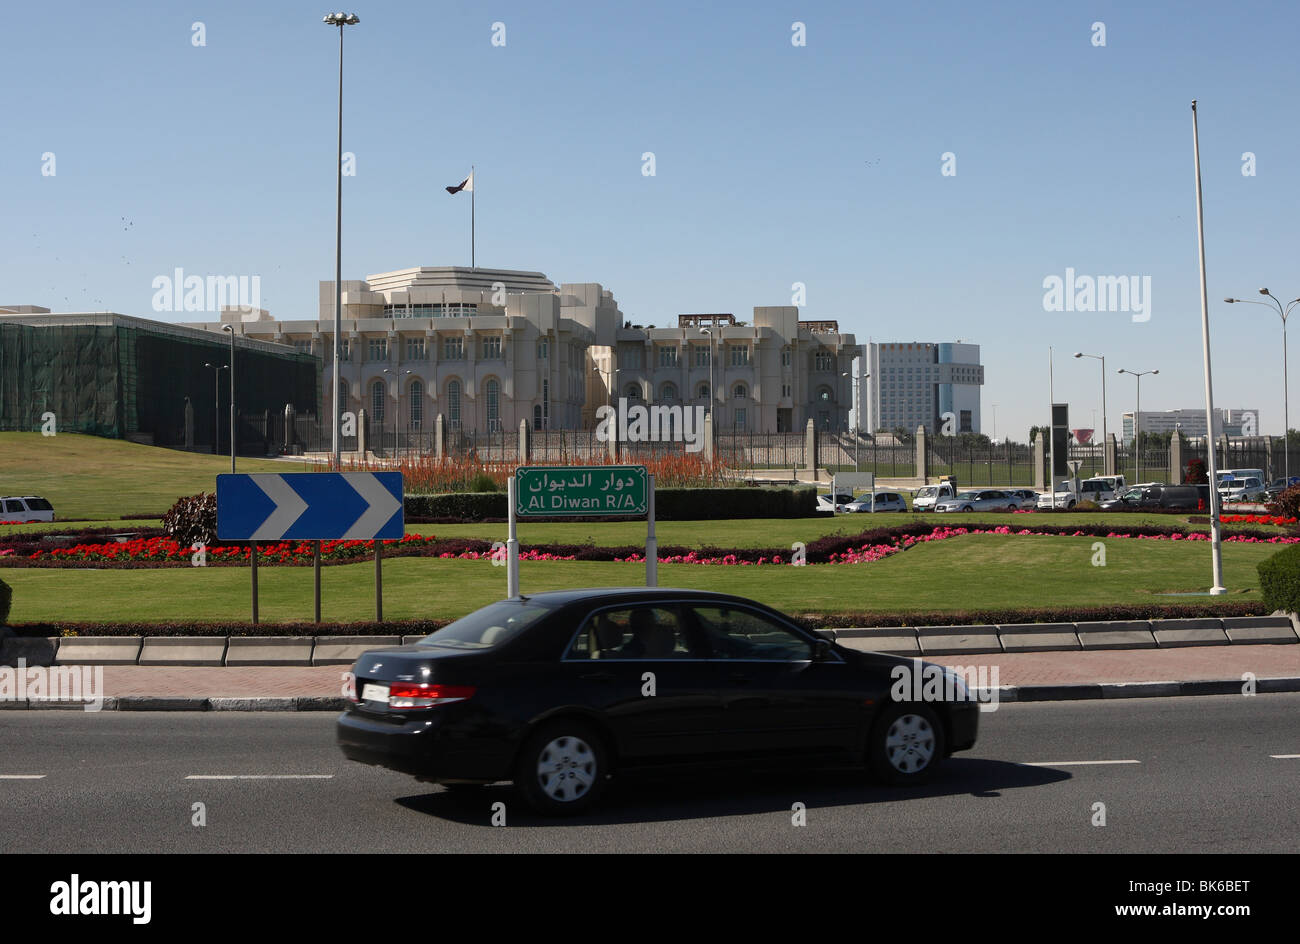 Al-Emiri Diwan, le palais de l'Emir du Qatar, Doha, Qatar, Moyen-Orient Banque D'Images